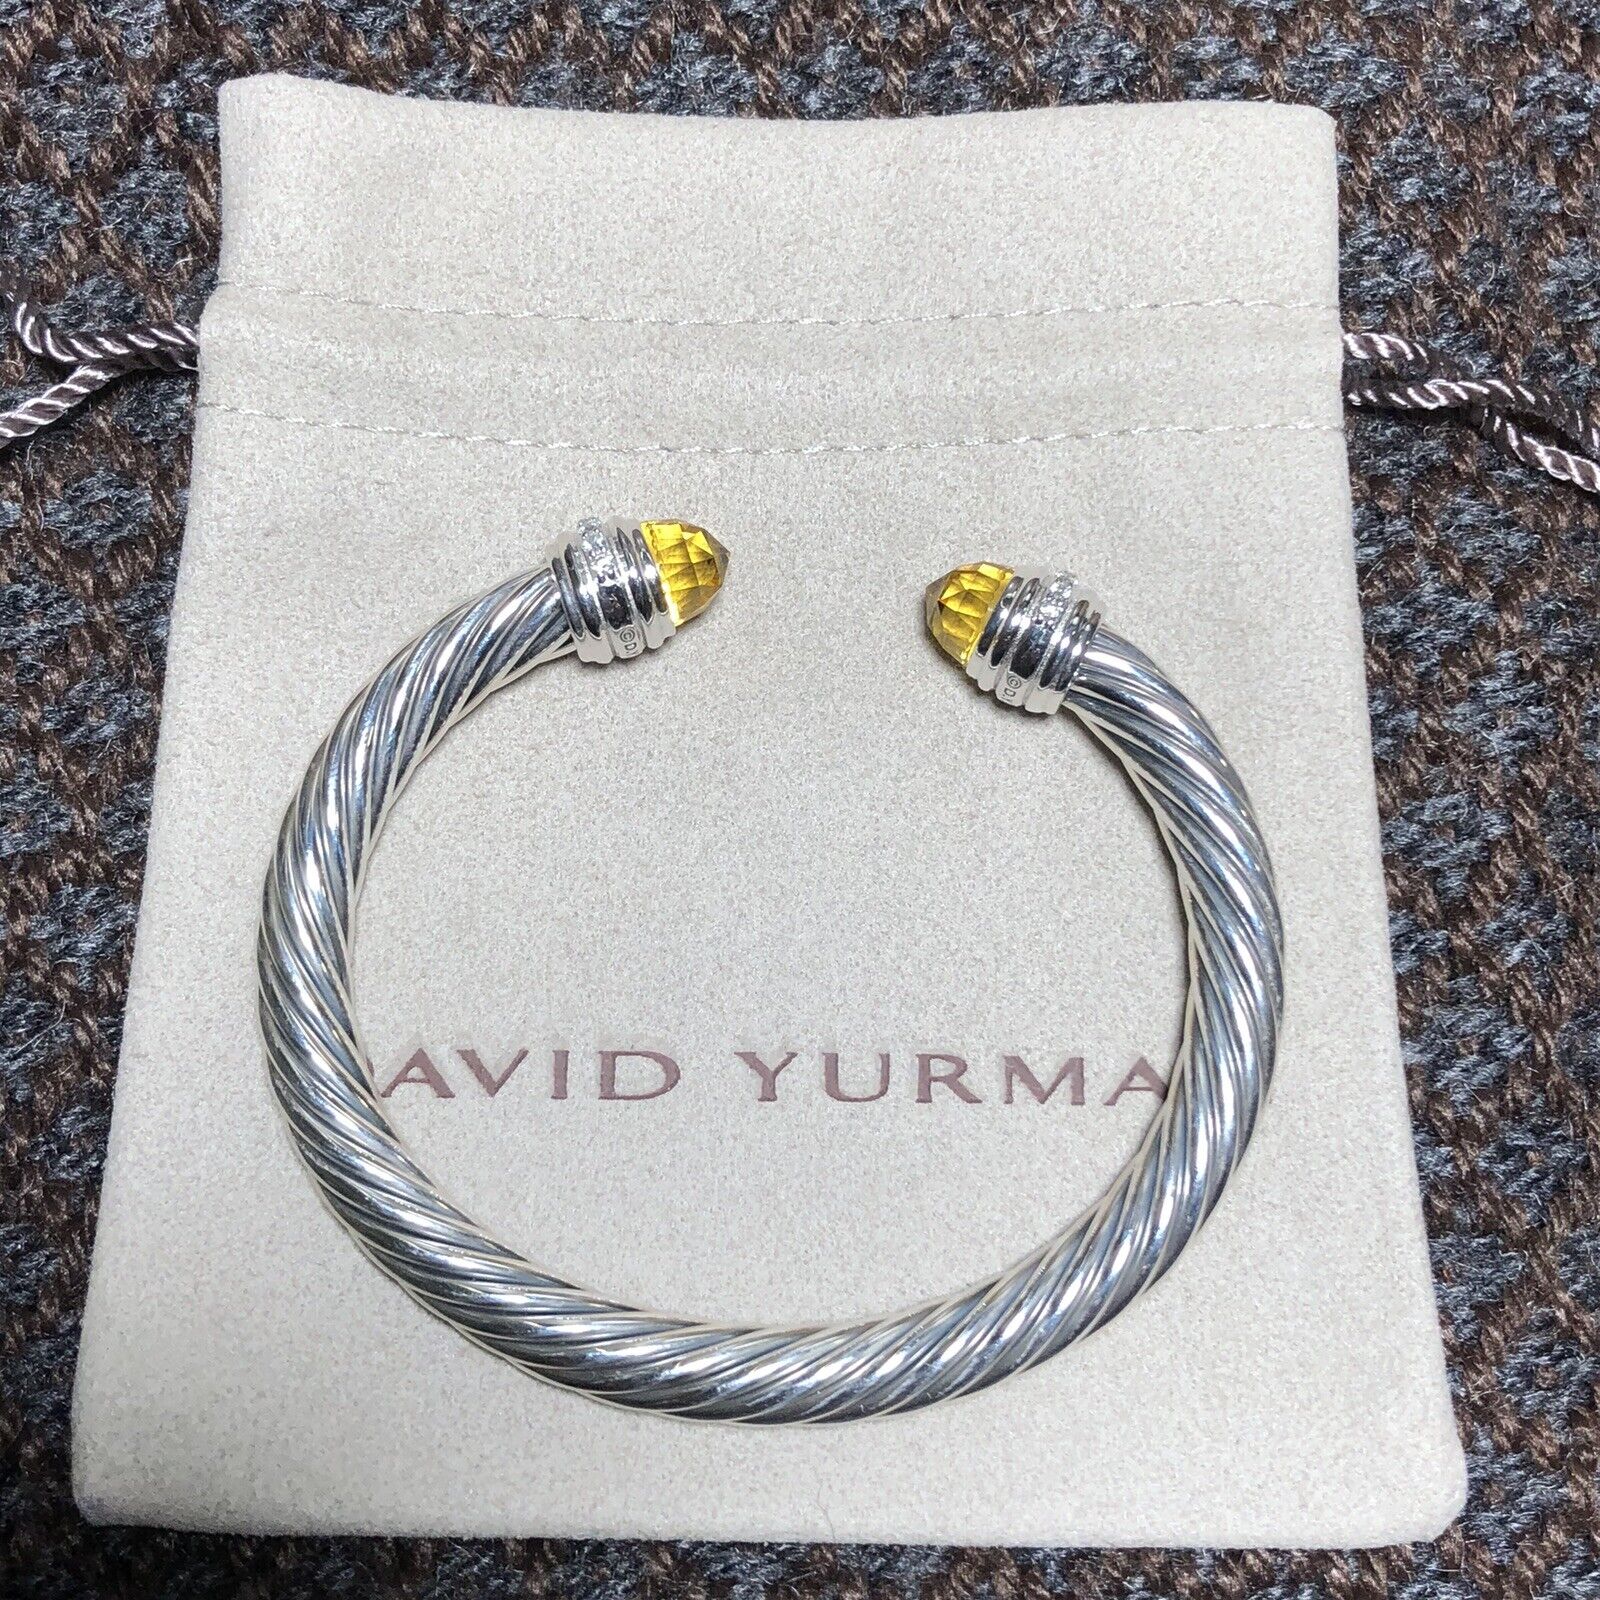 David Yurman 7mm Cable Classic Bracelet & 925 Silver Lemon Citrine & Diamonds M